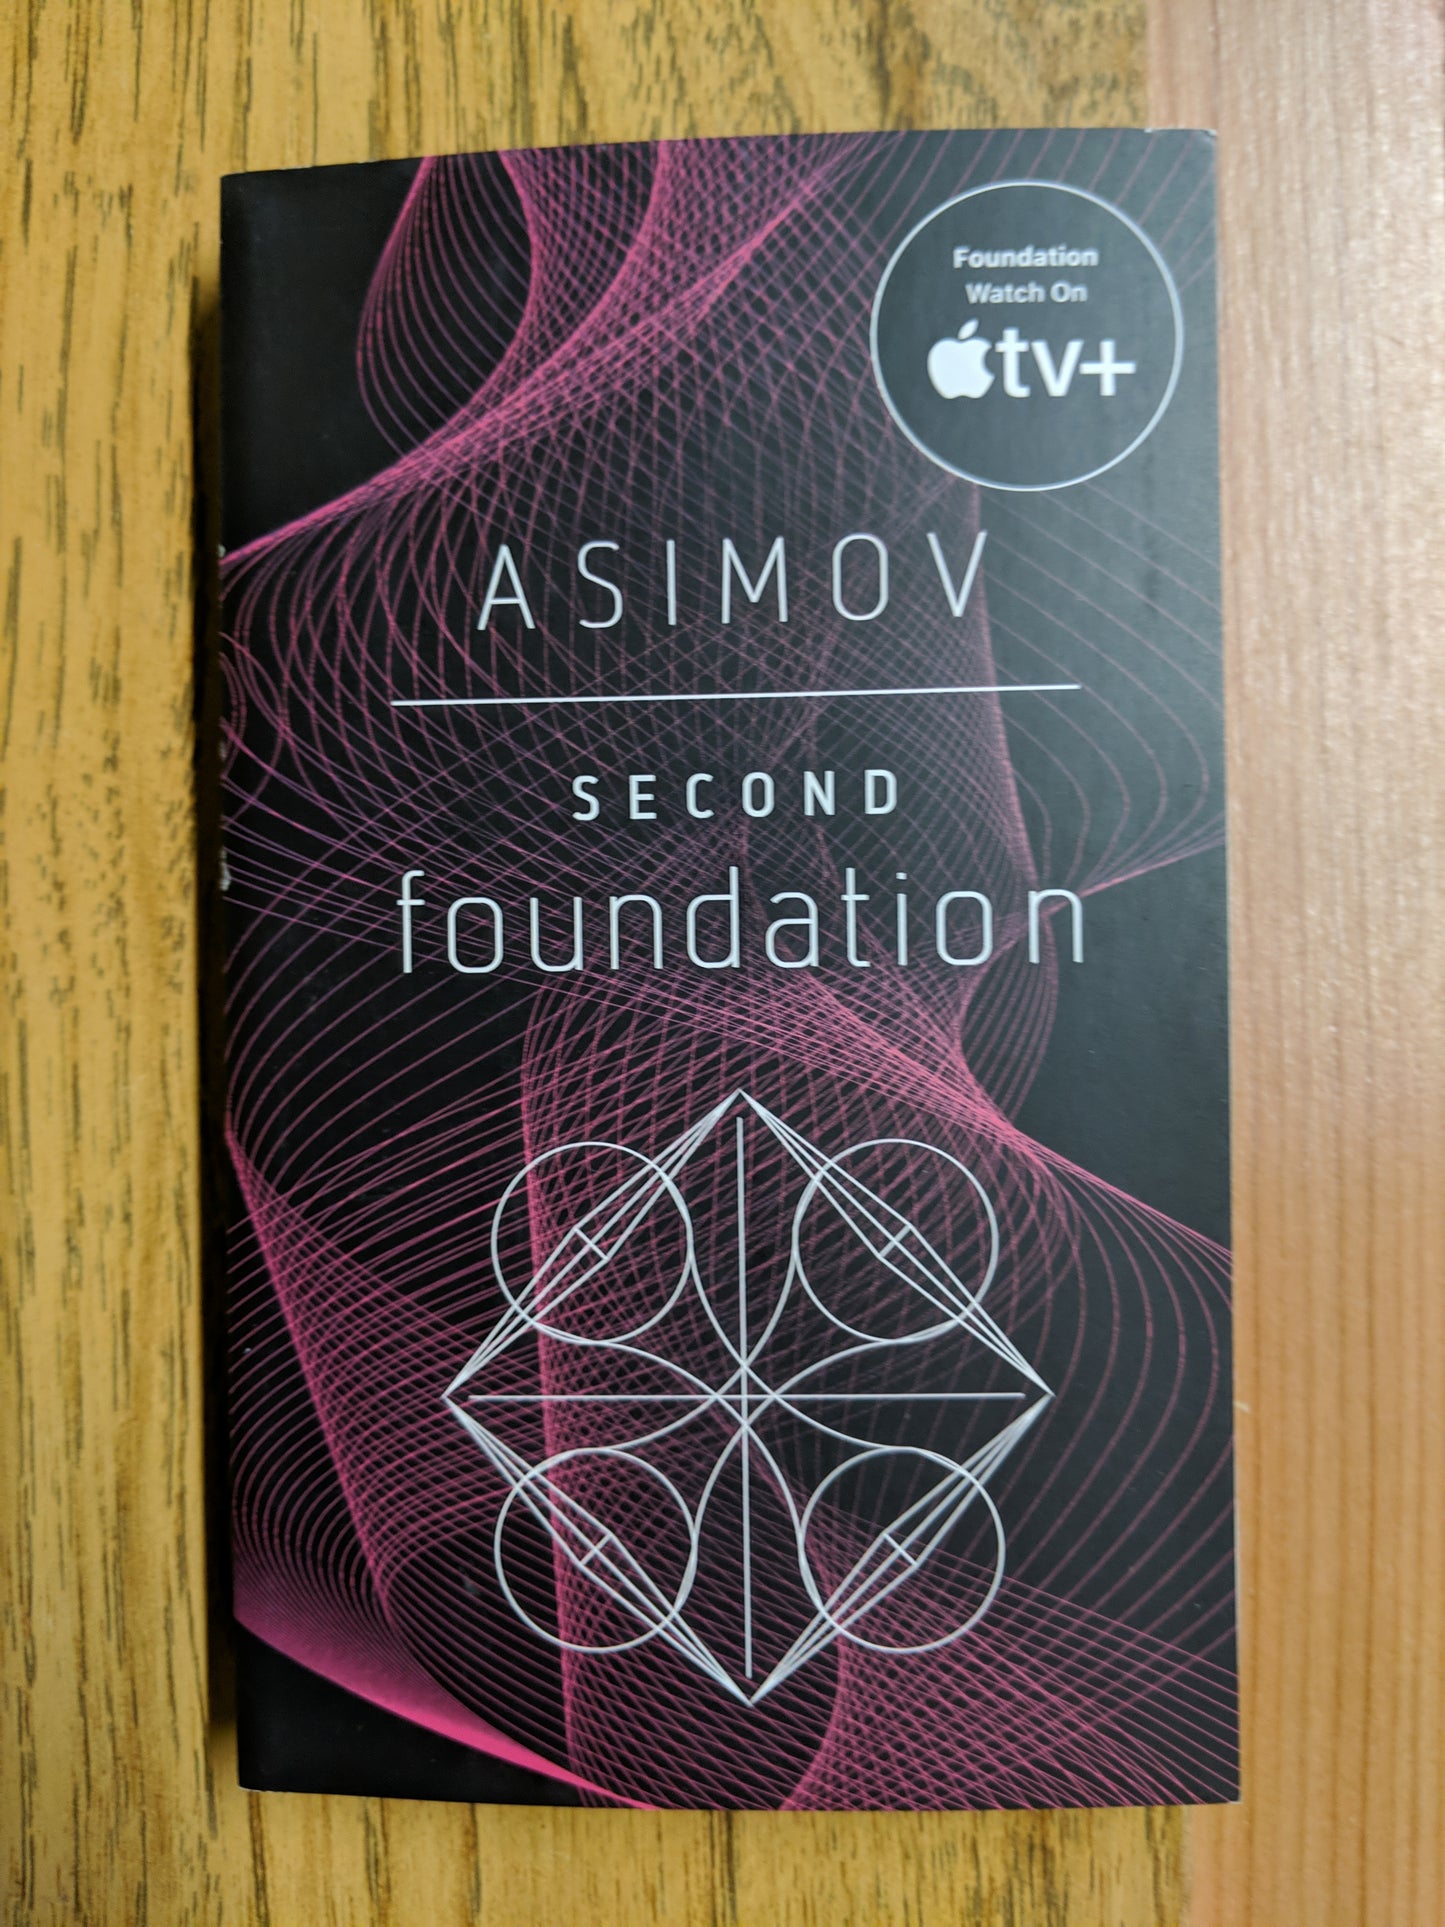 Second Foundation